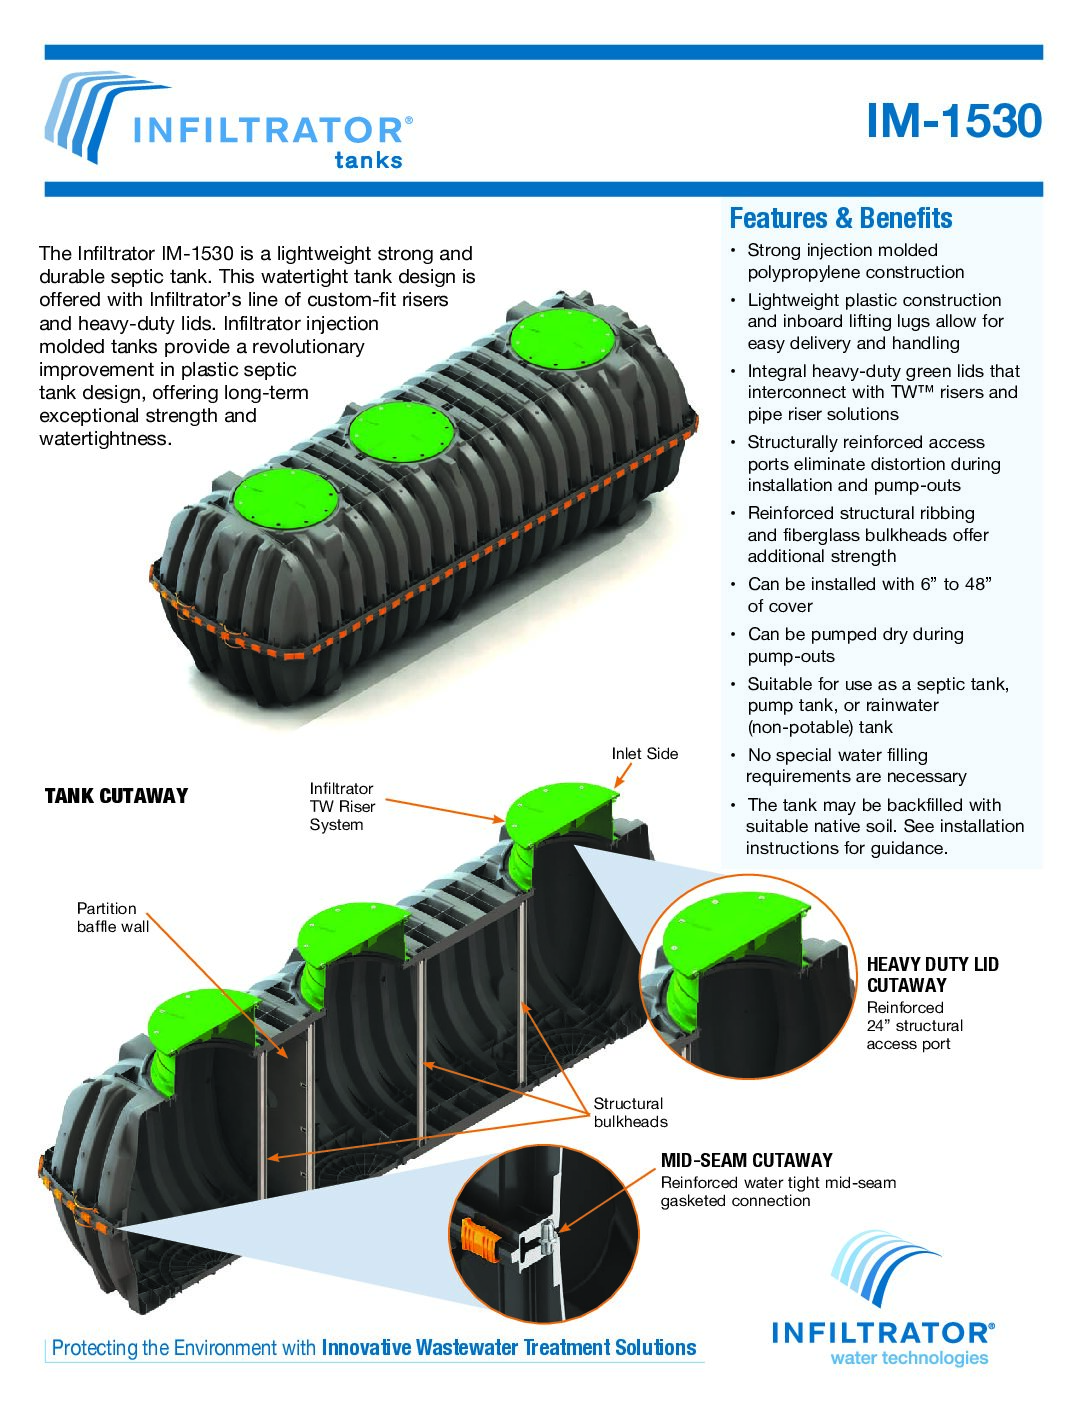 Infiltrator IM-1530 Plastic Septic Tank Information Sheet